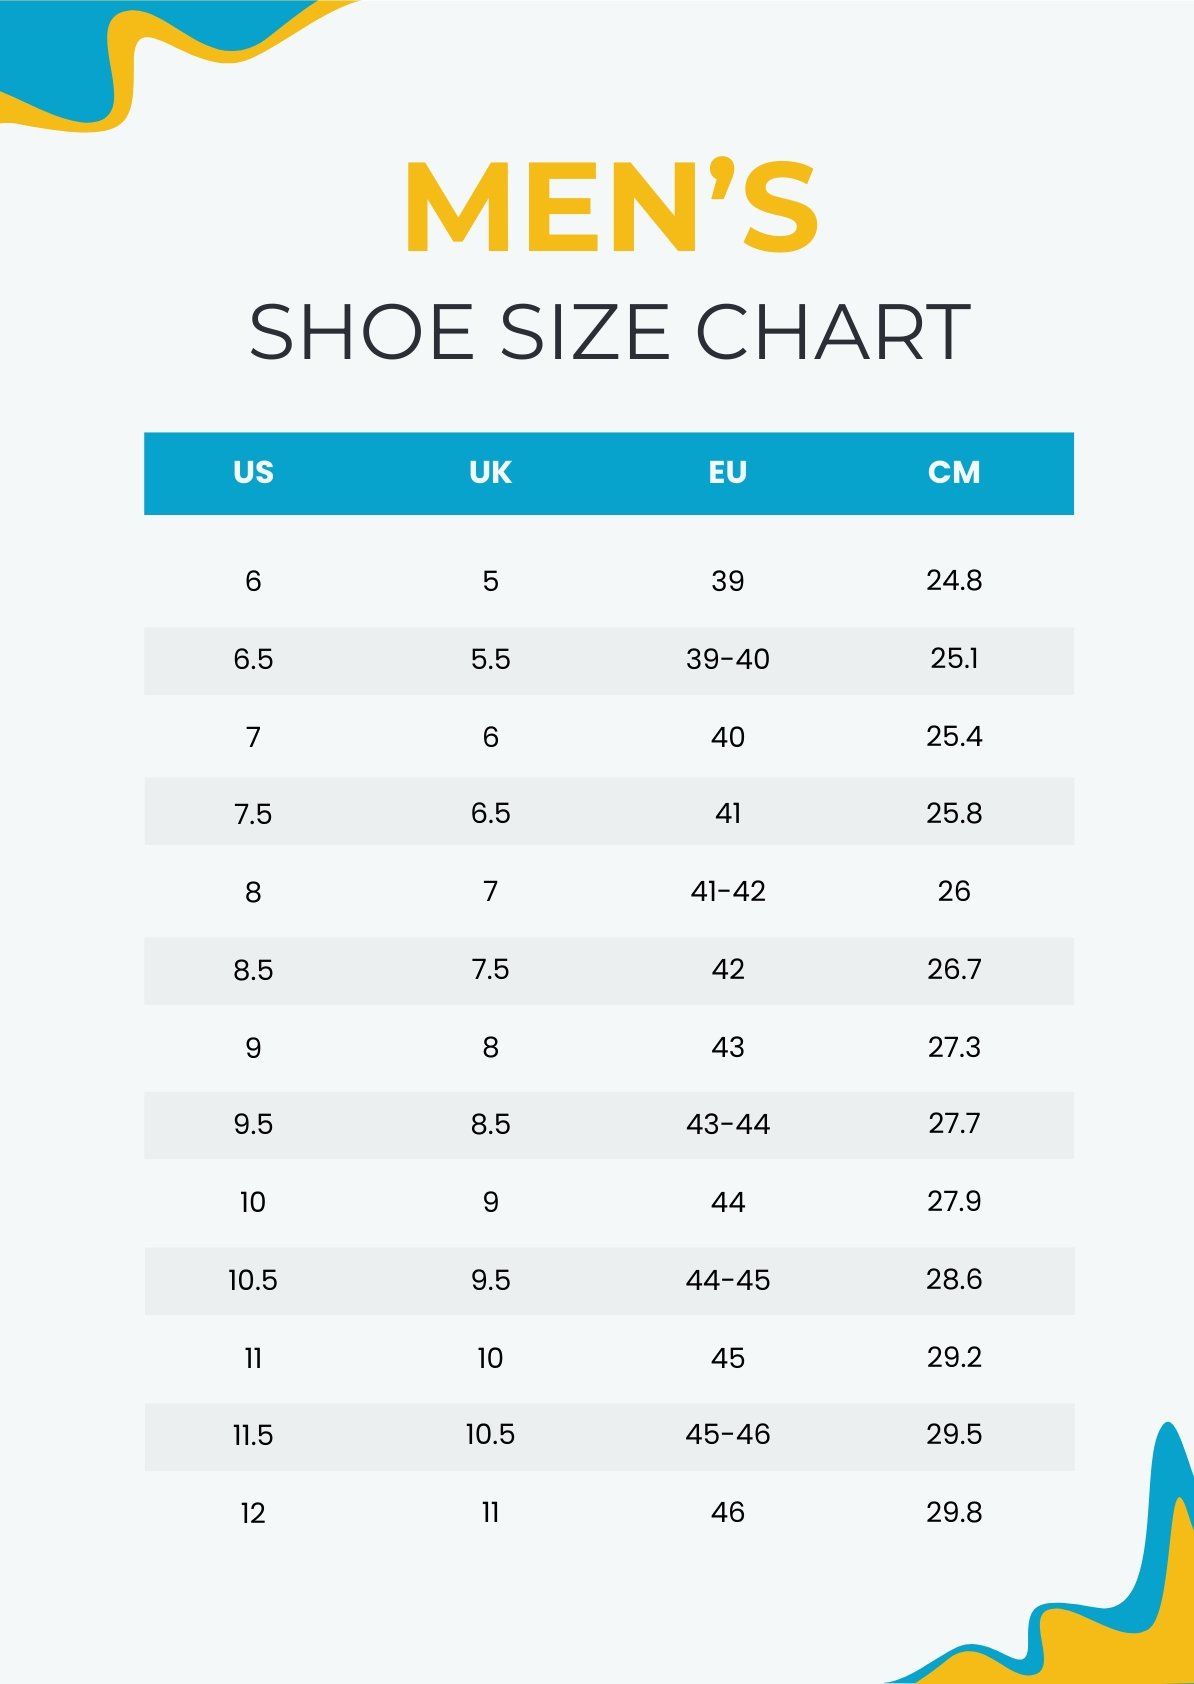 Men's Shoe Size Chart in PDF, Illustrator